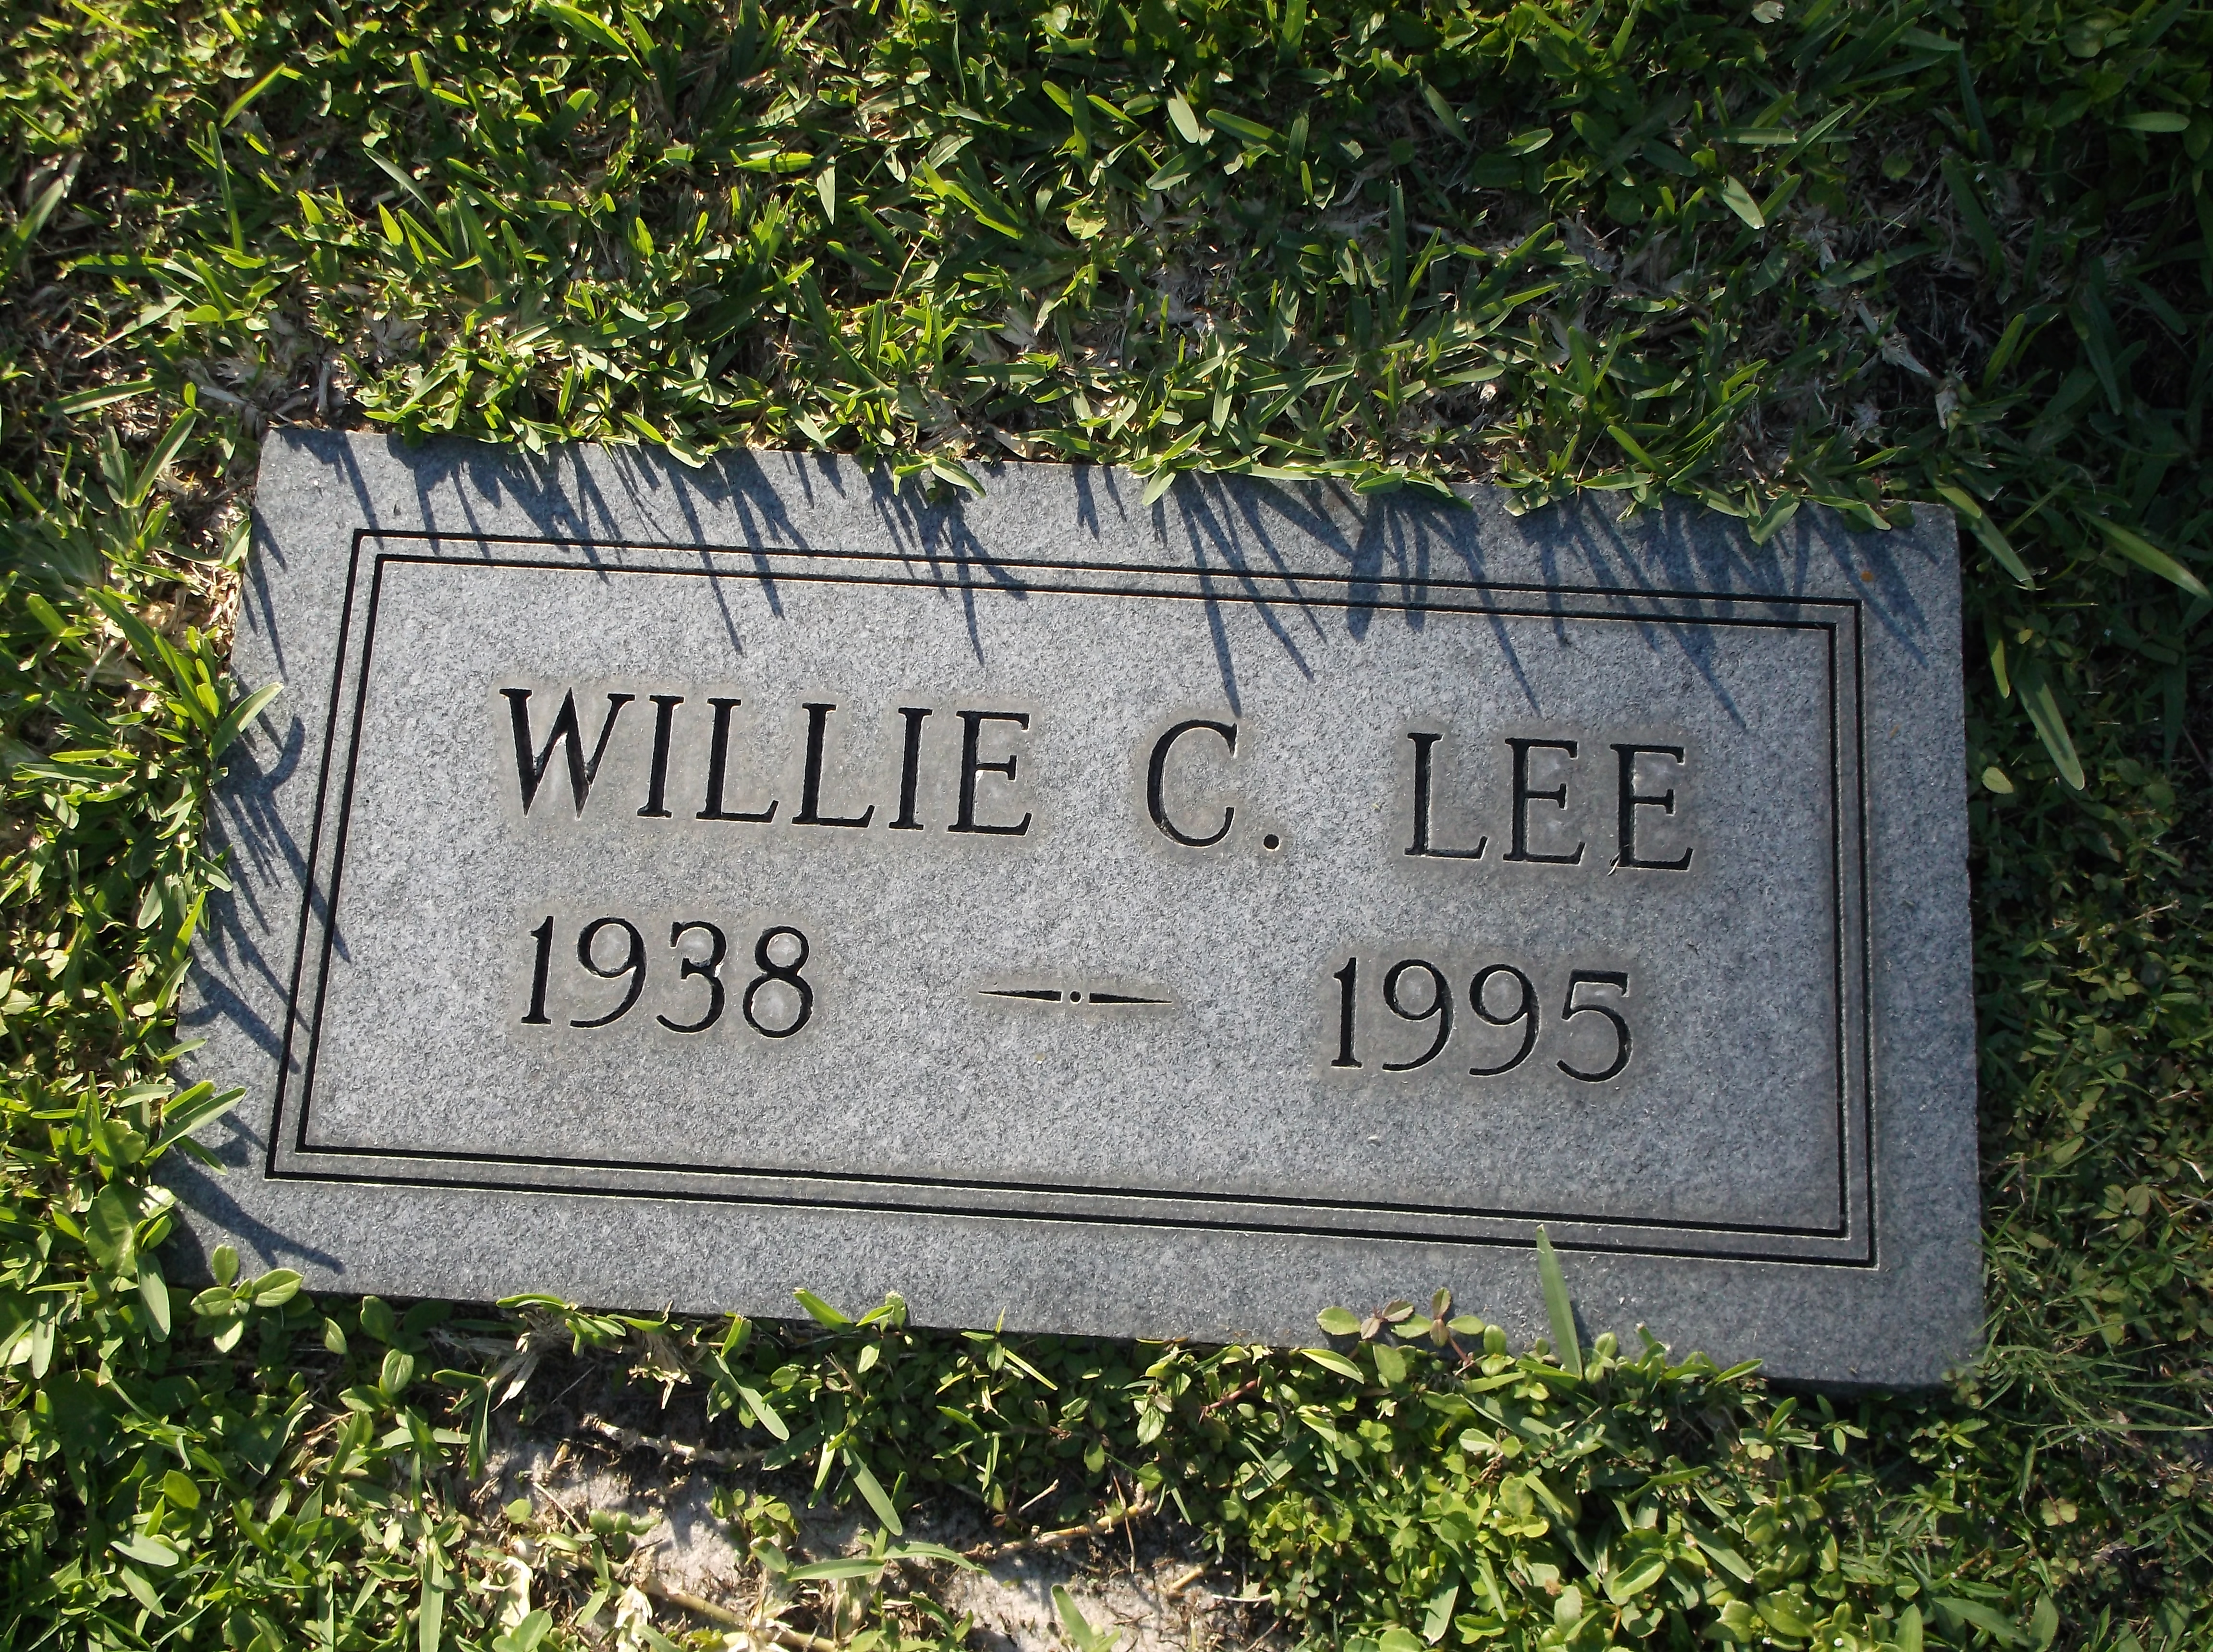 Willie C Lee